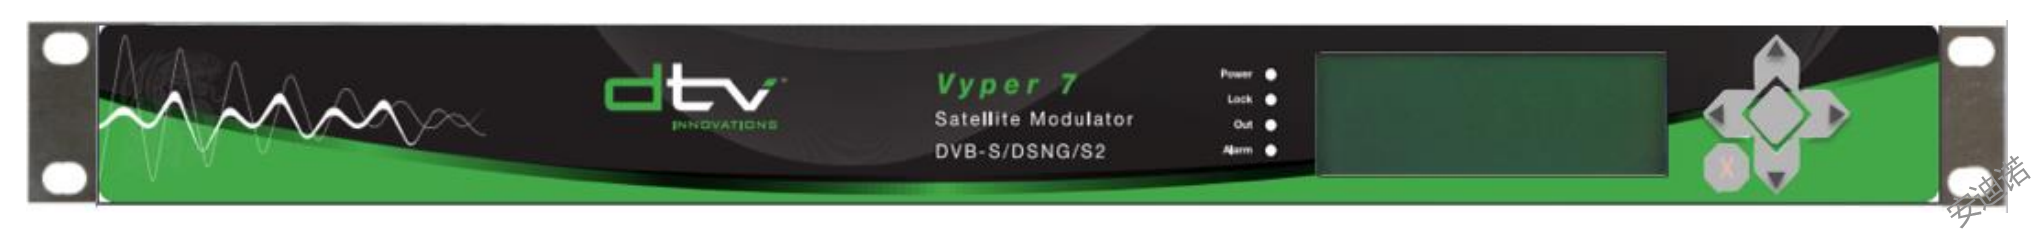 Vyper 7 DVB Satellite Modulator